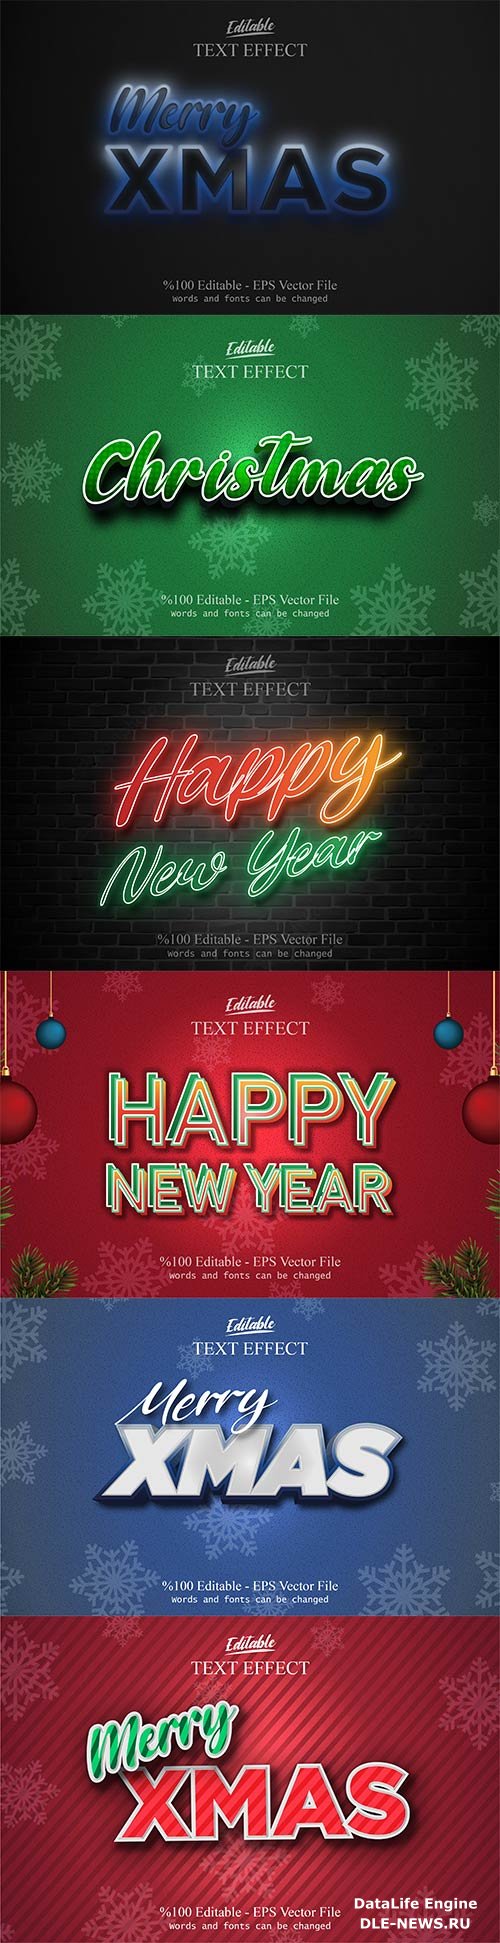 2022 New year, Merry christmas editable text effect premium vector vol 3